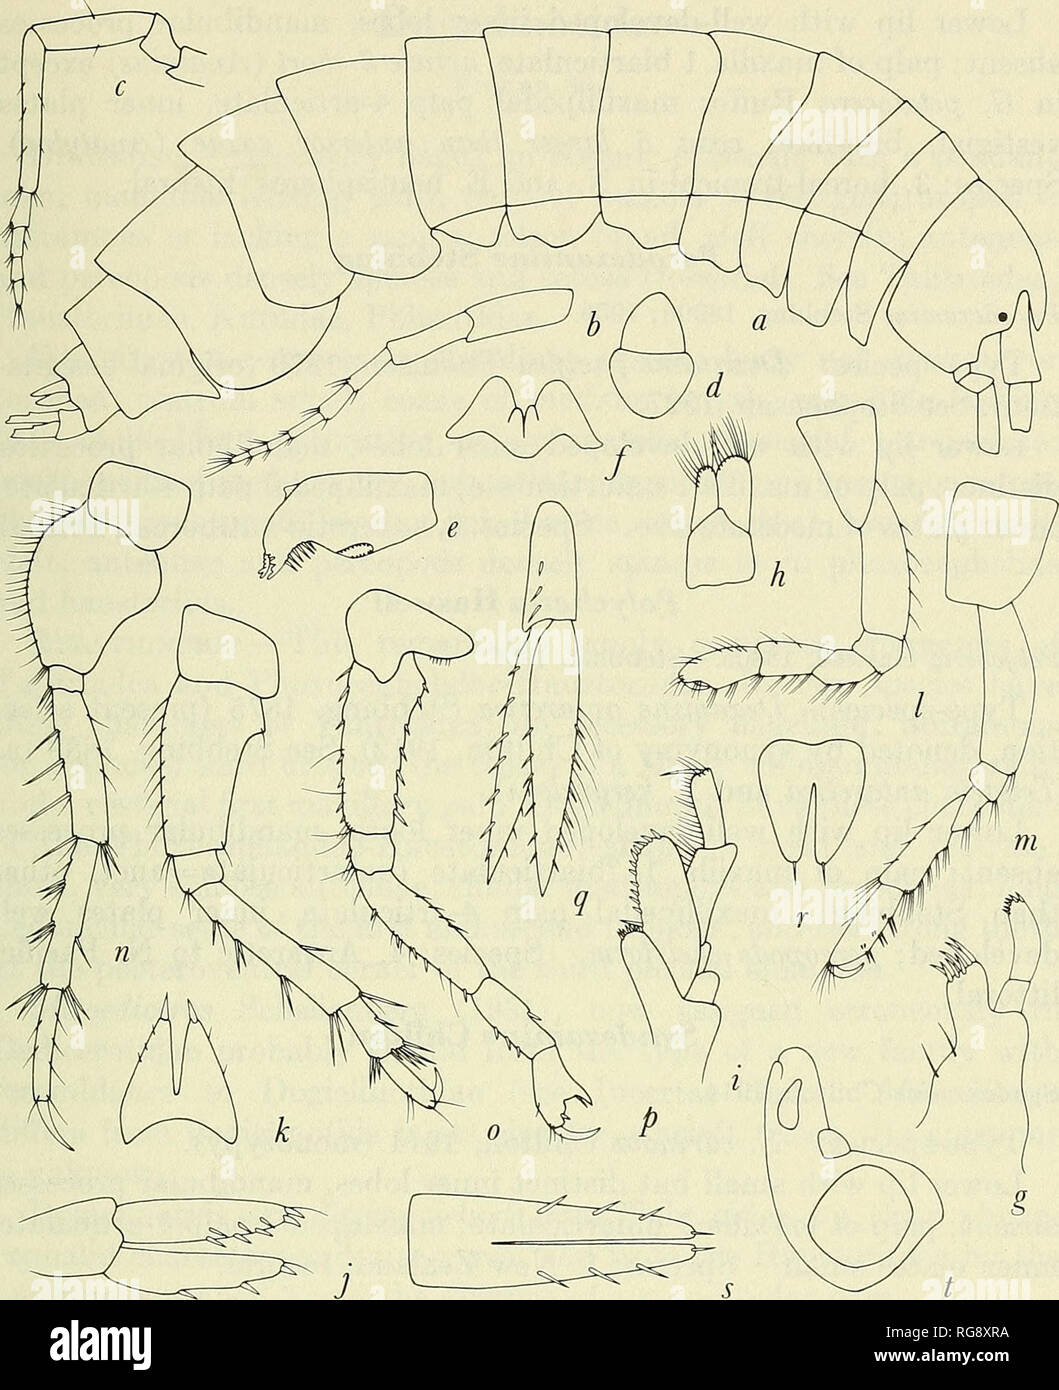 . Bulletin - United States National Museum. Science. MARINE GAMMARIDEAN AMPHIPODA 205. Figure 85.—Dexaminldae: Anatylus pavlovskii Bulycheva (1955), parts as follows: a, body without appendages; h,c, antennae 1, 2; d, upper lip; e, mandible;/, lower lip; g,h, maxillae 1, 2; i, maxilliped; /, uropod 3; k, telson; l,m, gnathopods 1, 2. Pereopod 4: n, Dexamine spinosa (Montagu) (Sars, 1895, pi. 167); o, Tritaeta gihhosa (Bate) (Sars, 1895, pi. 168). Pereopod 3: p, Polycheria antarctica (Stebbing, 1888). Uropod 3: q, Dexamine. Telson: r, Guernea coalita (Norman) (Chevreux and Page, 1925); s, Dexam Stock Photo